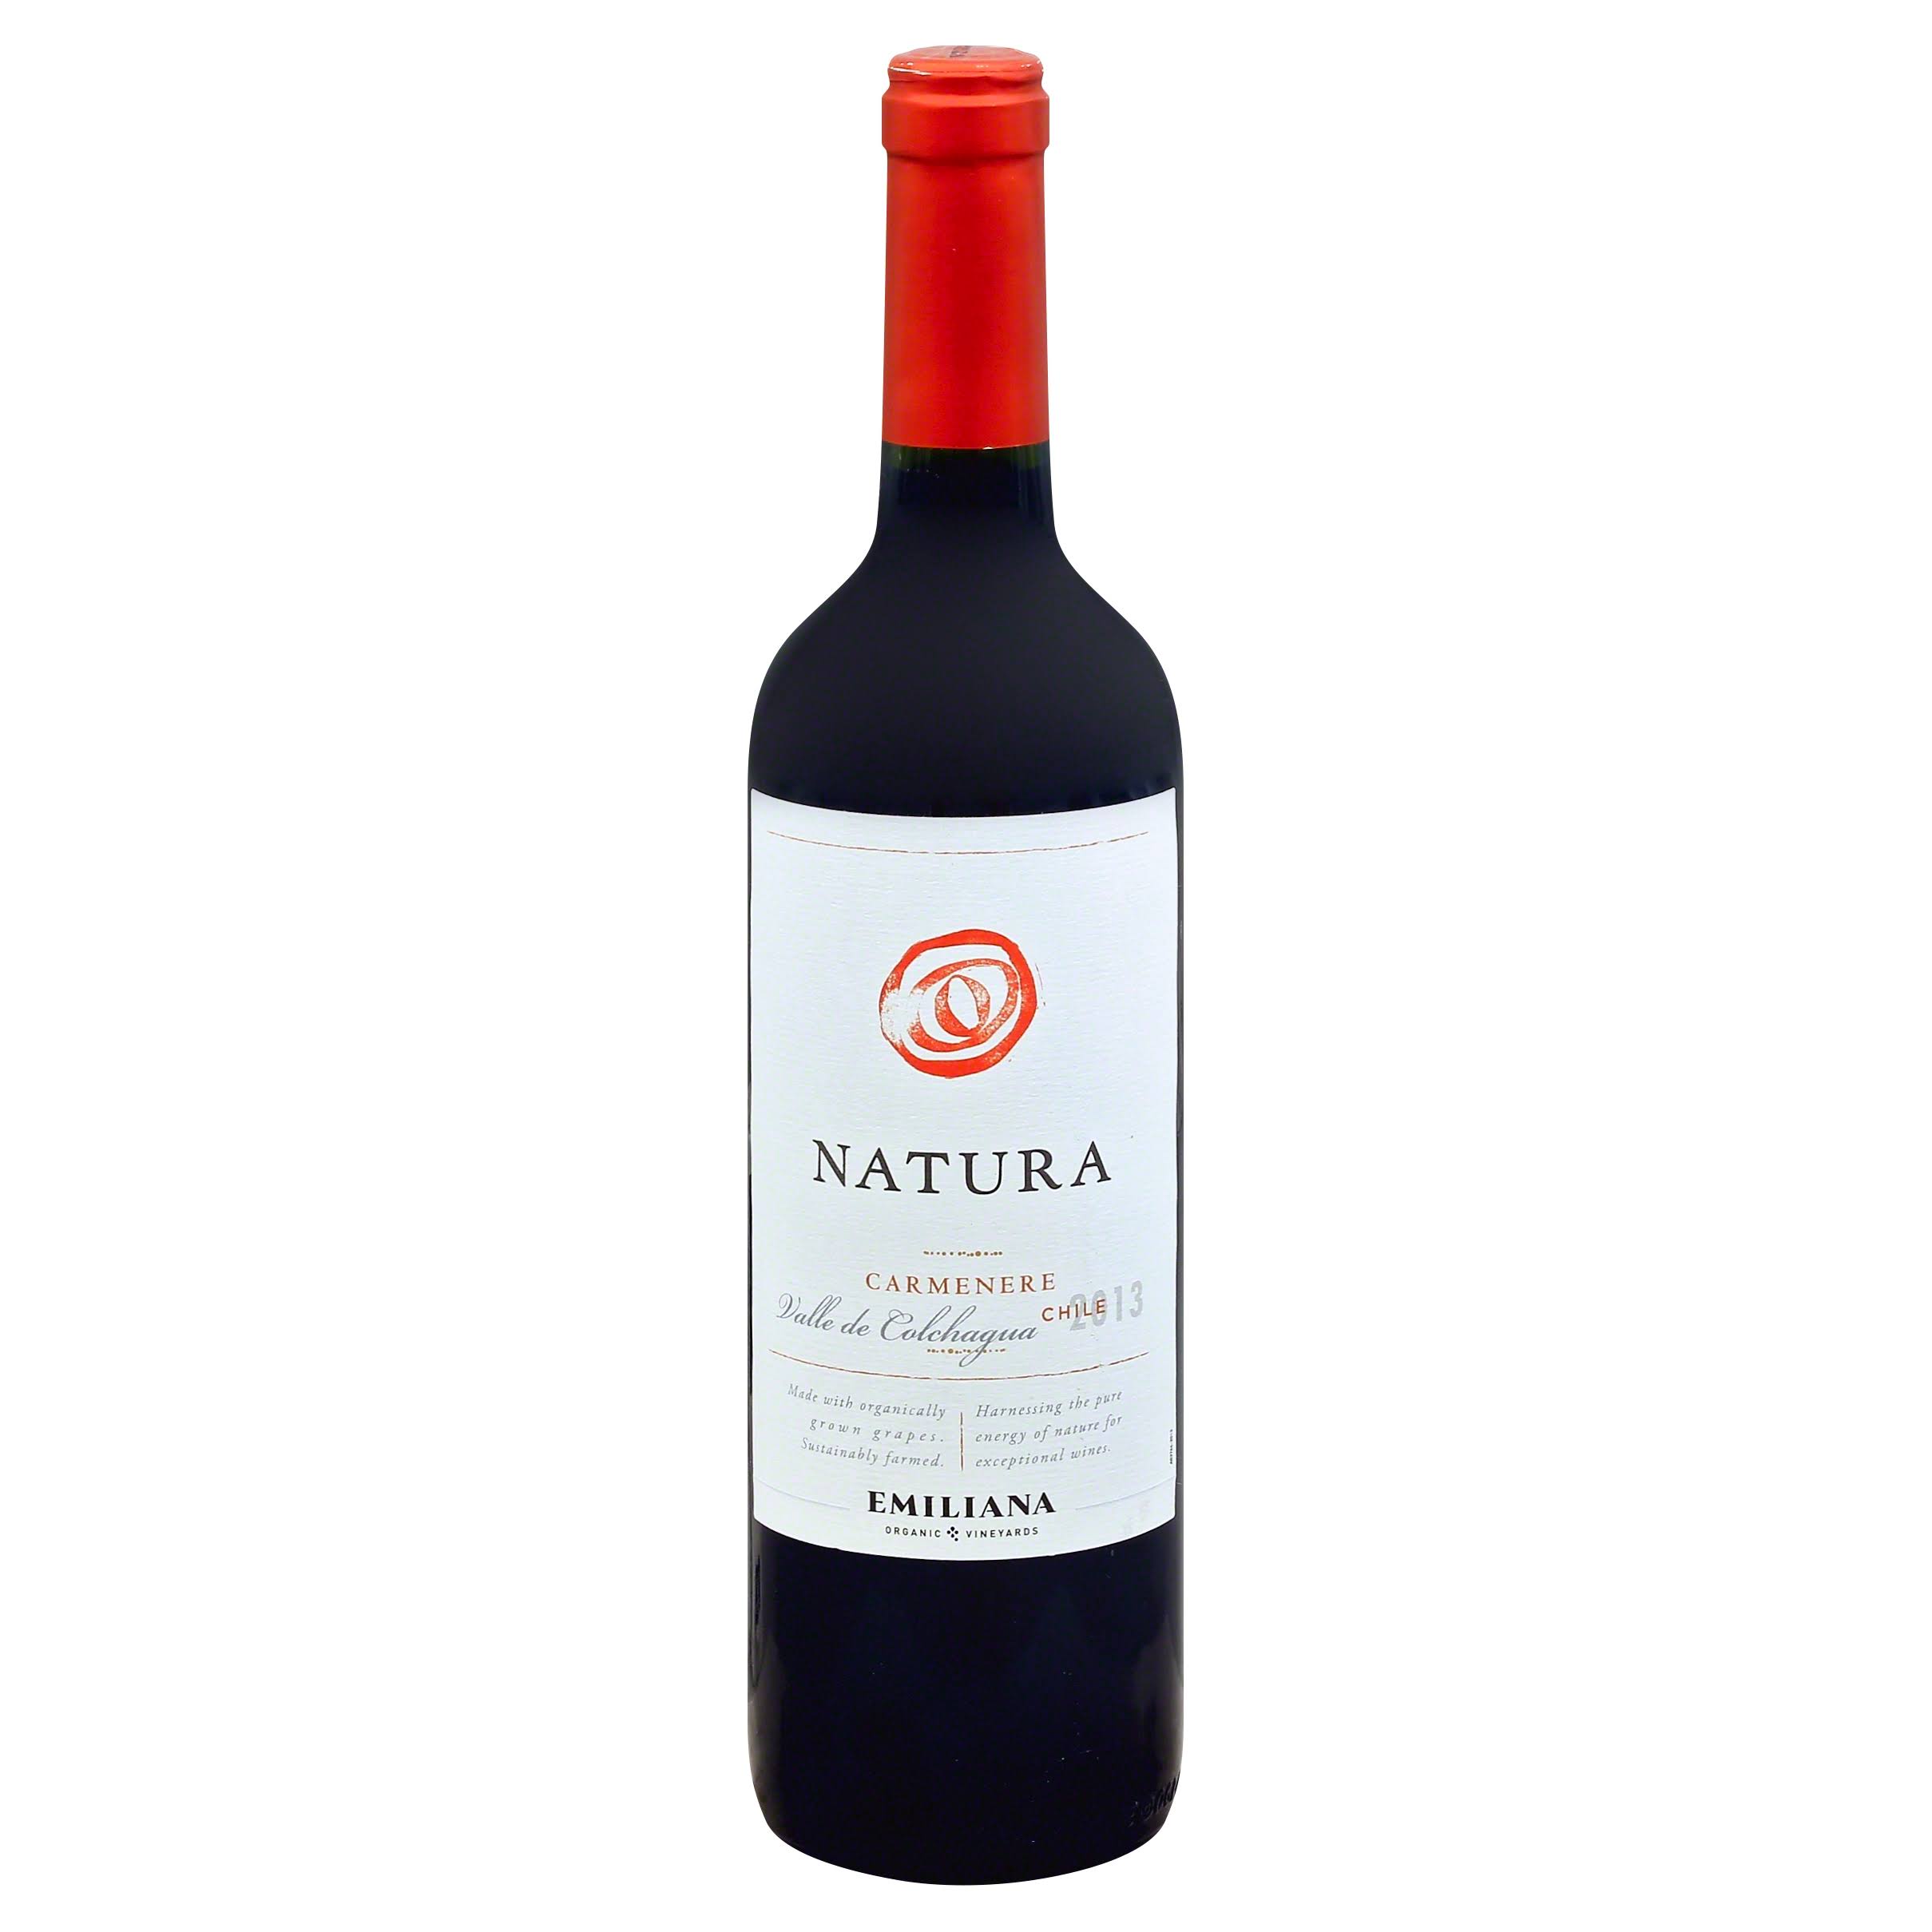 Emiliana Natura Carmenere Wine, Chile (Vintage Varies) - 750 ml bottle